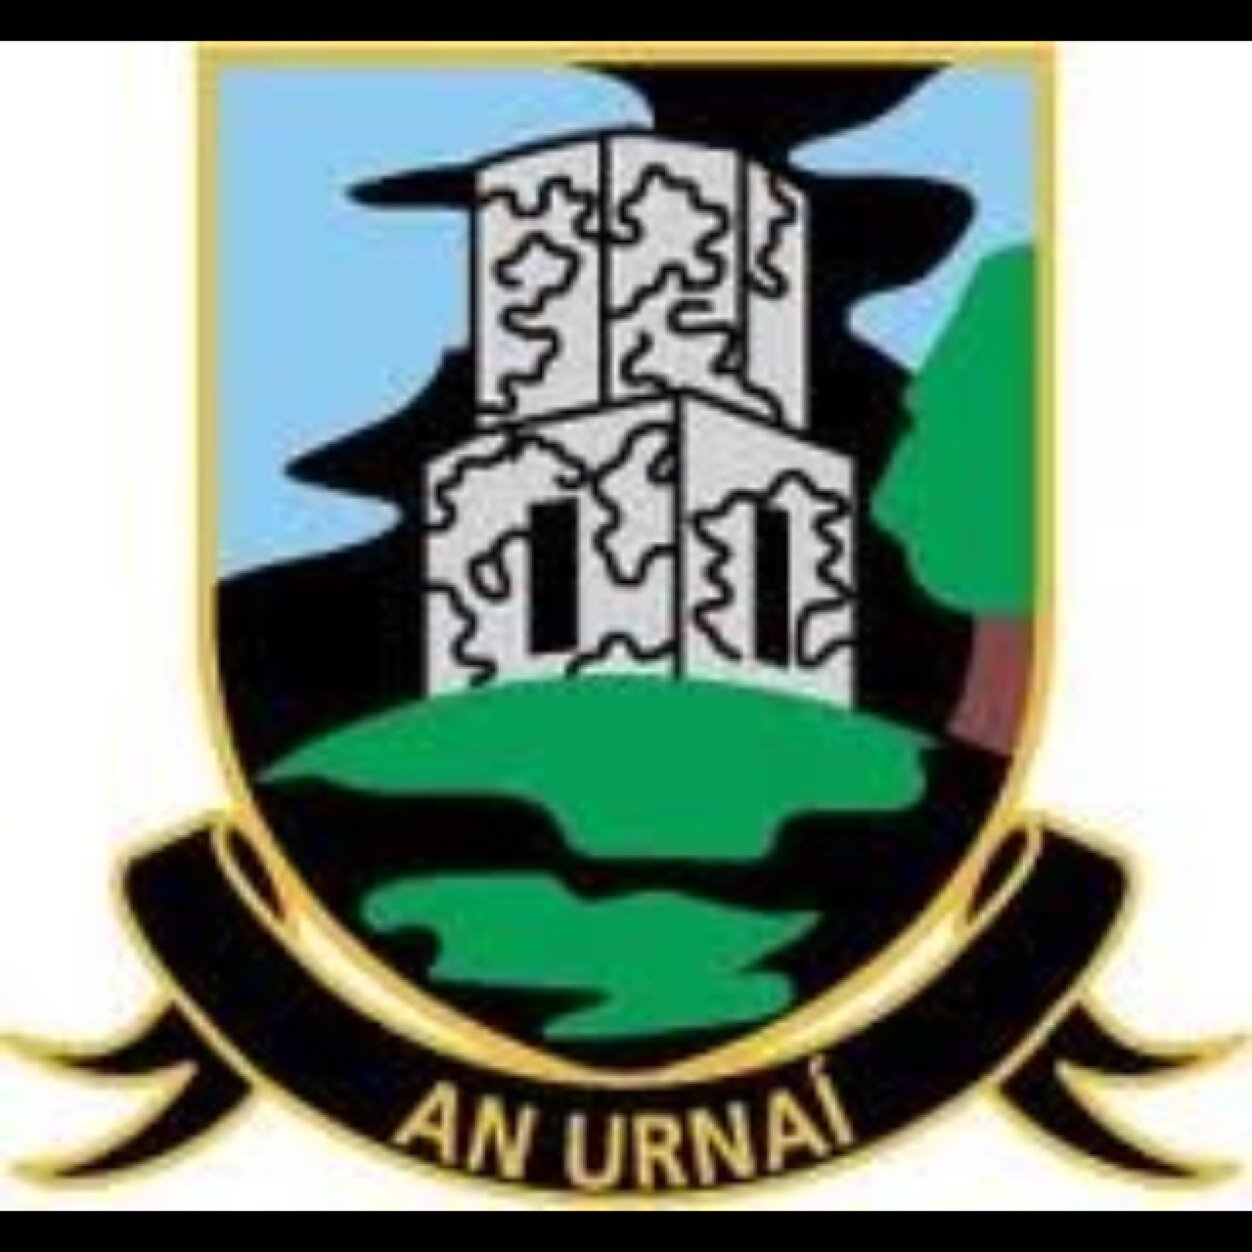 Official Twitter Account of Nurney GAA Club, Co.Kildare, Ireland.